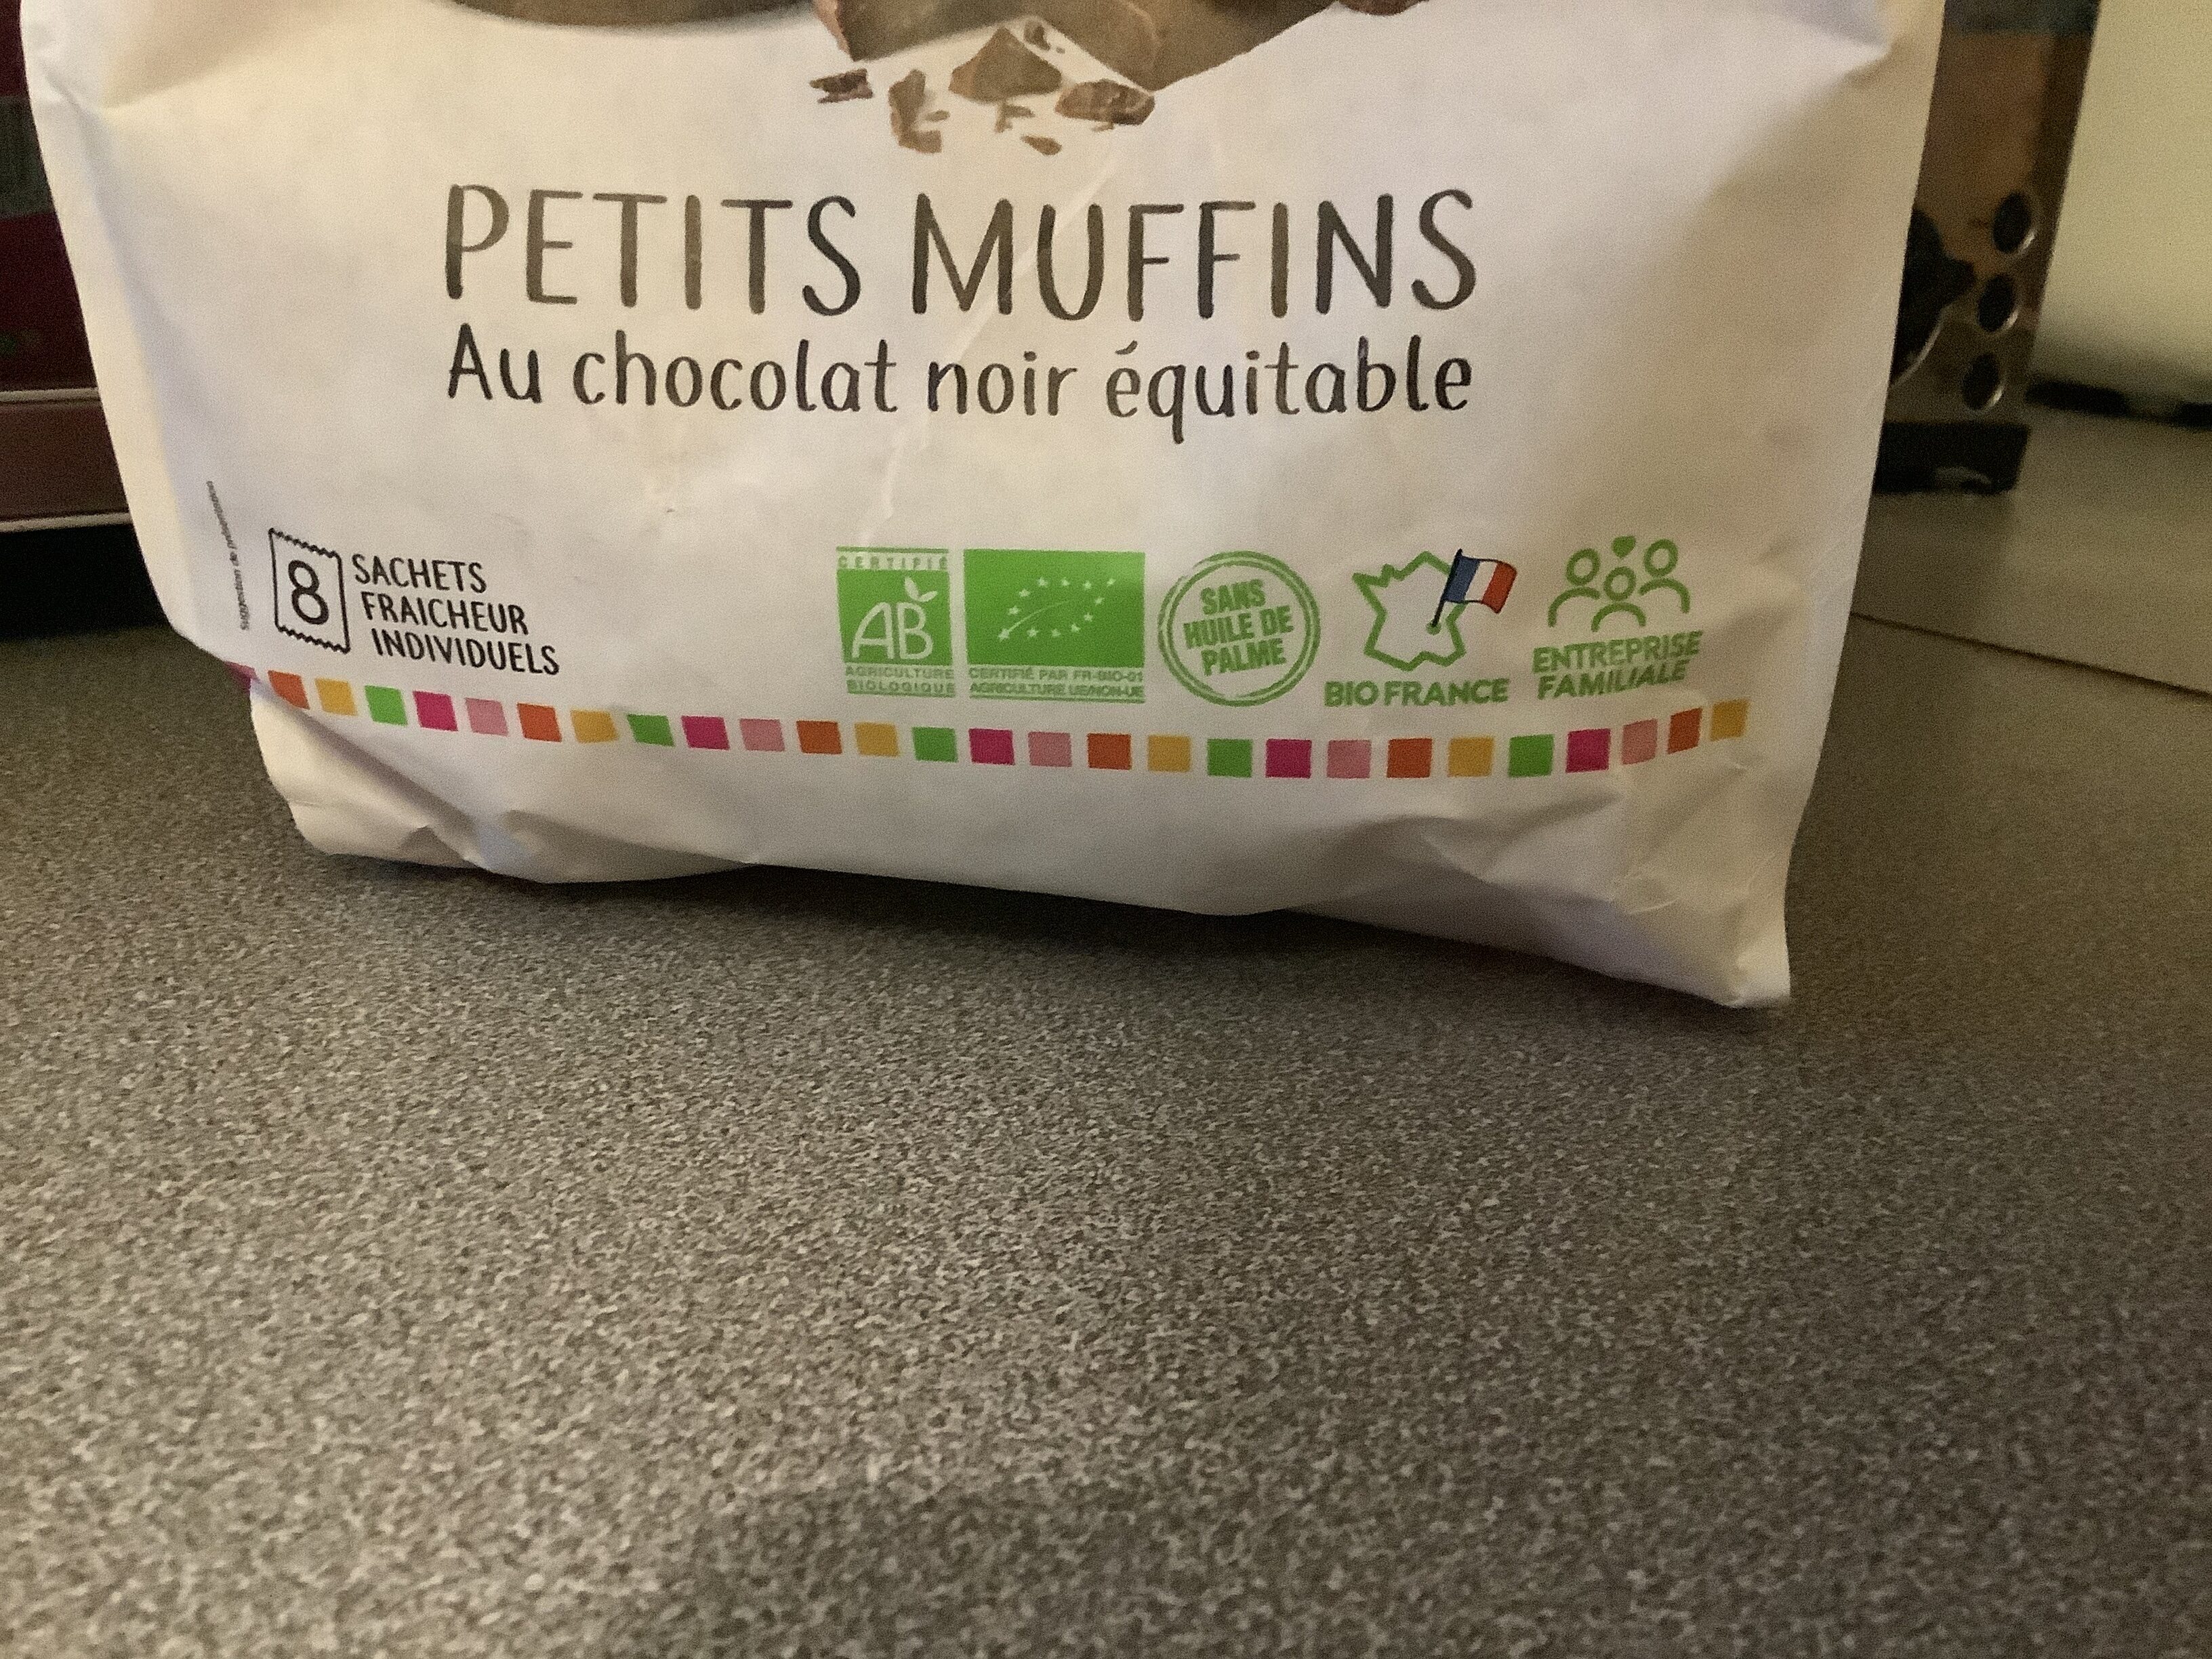 Petits muffins - Instruction de recyclage et/ou informations d'emballage